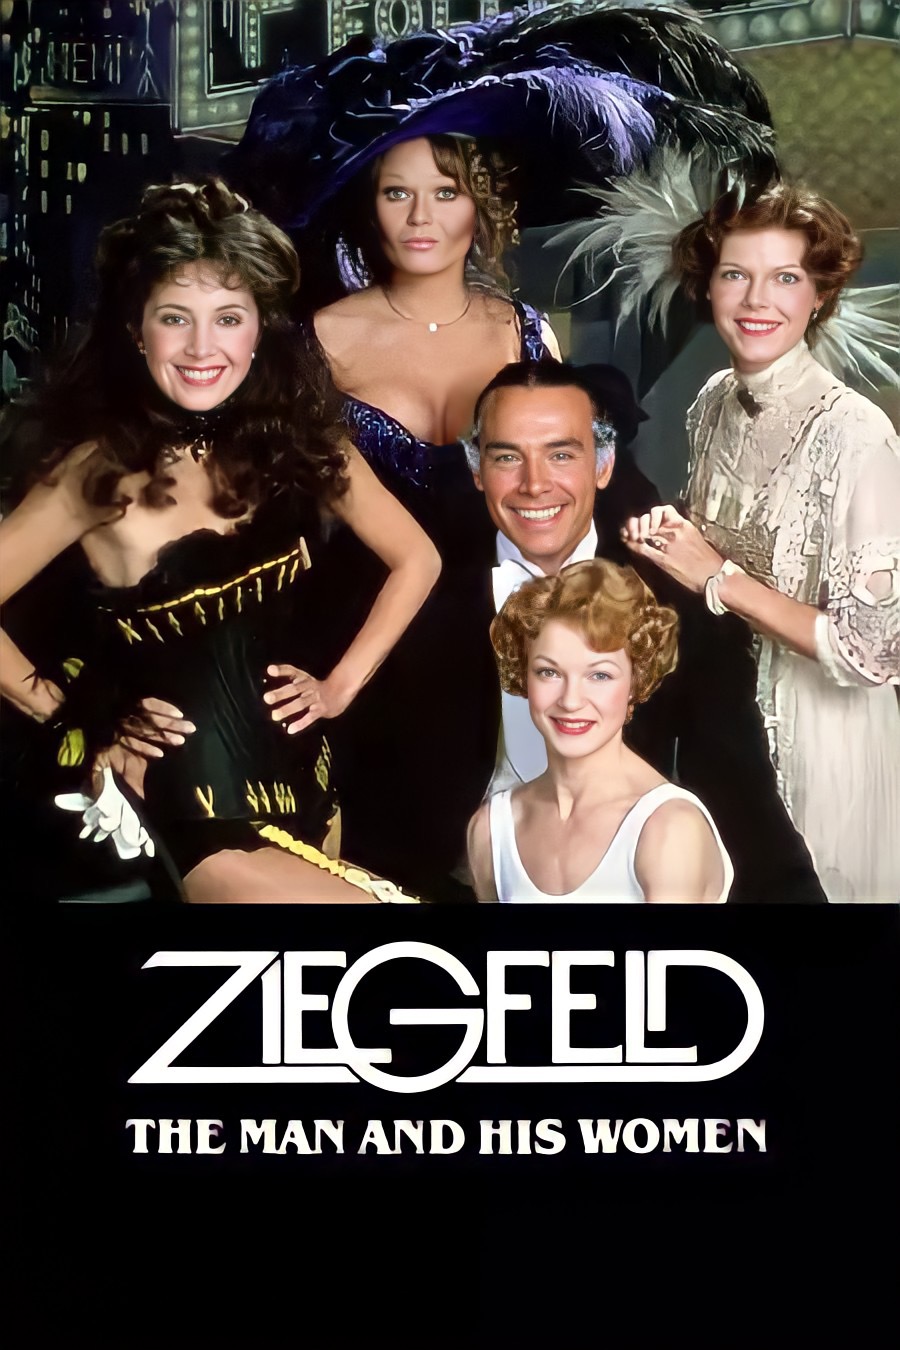 Ziegfeld: The Man and His Women (1978) Screenshot 4 